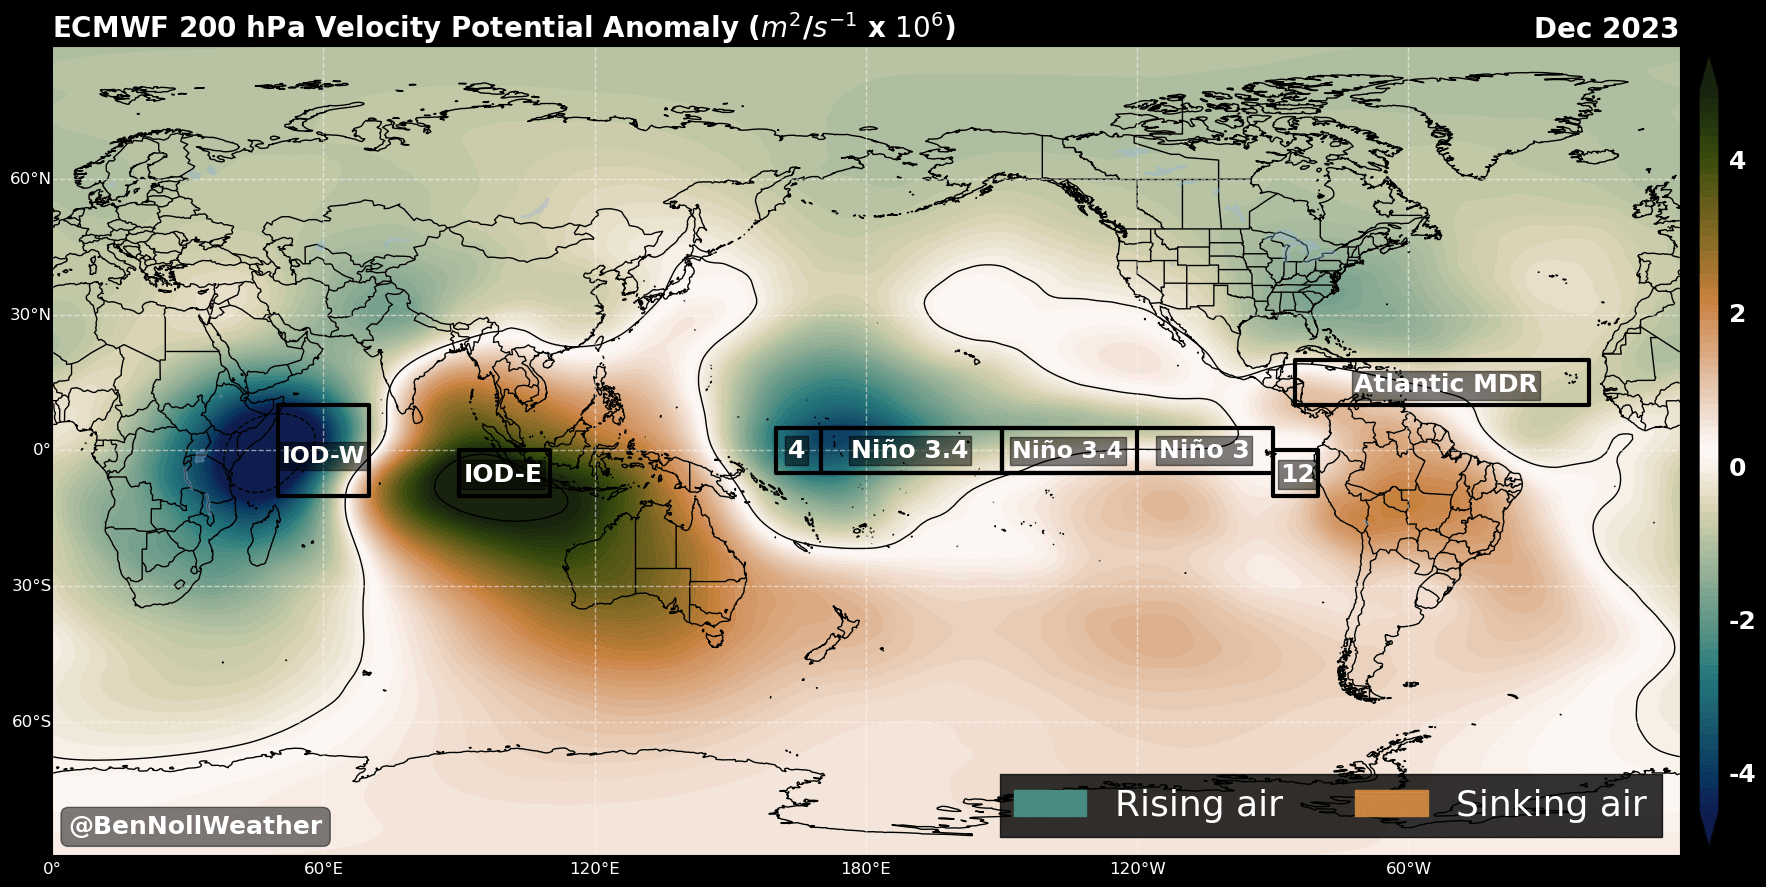 el-nino-watch-winter-weather-season-forecast-2023-2024-united-states-enso-circulation-pressure-pattern-atmospheric-modulation